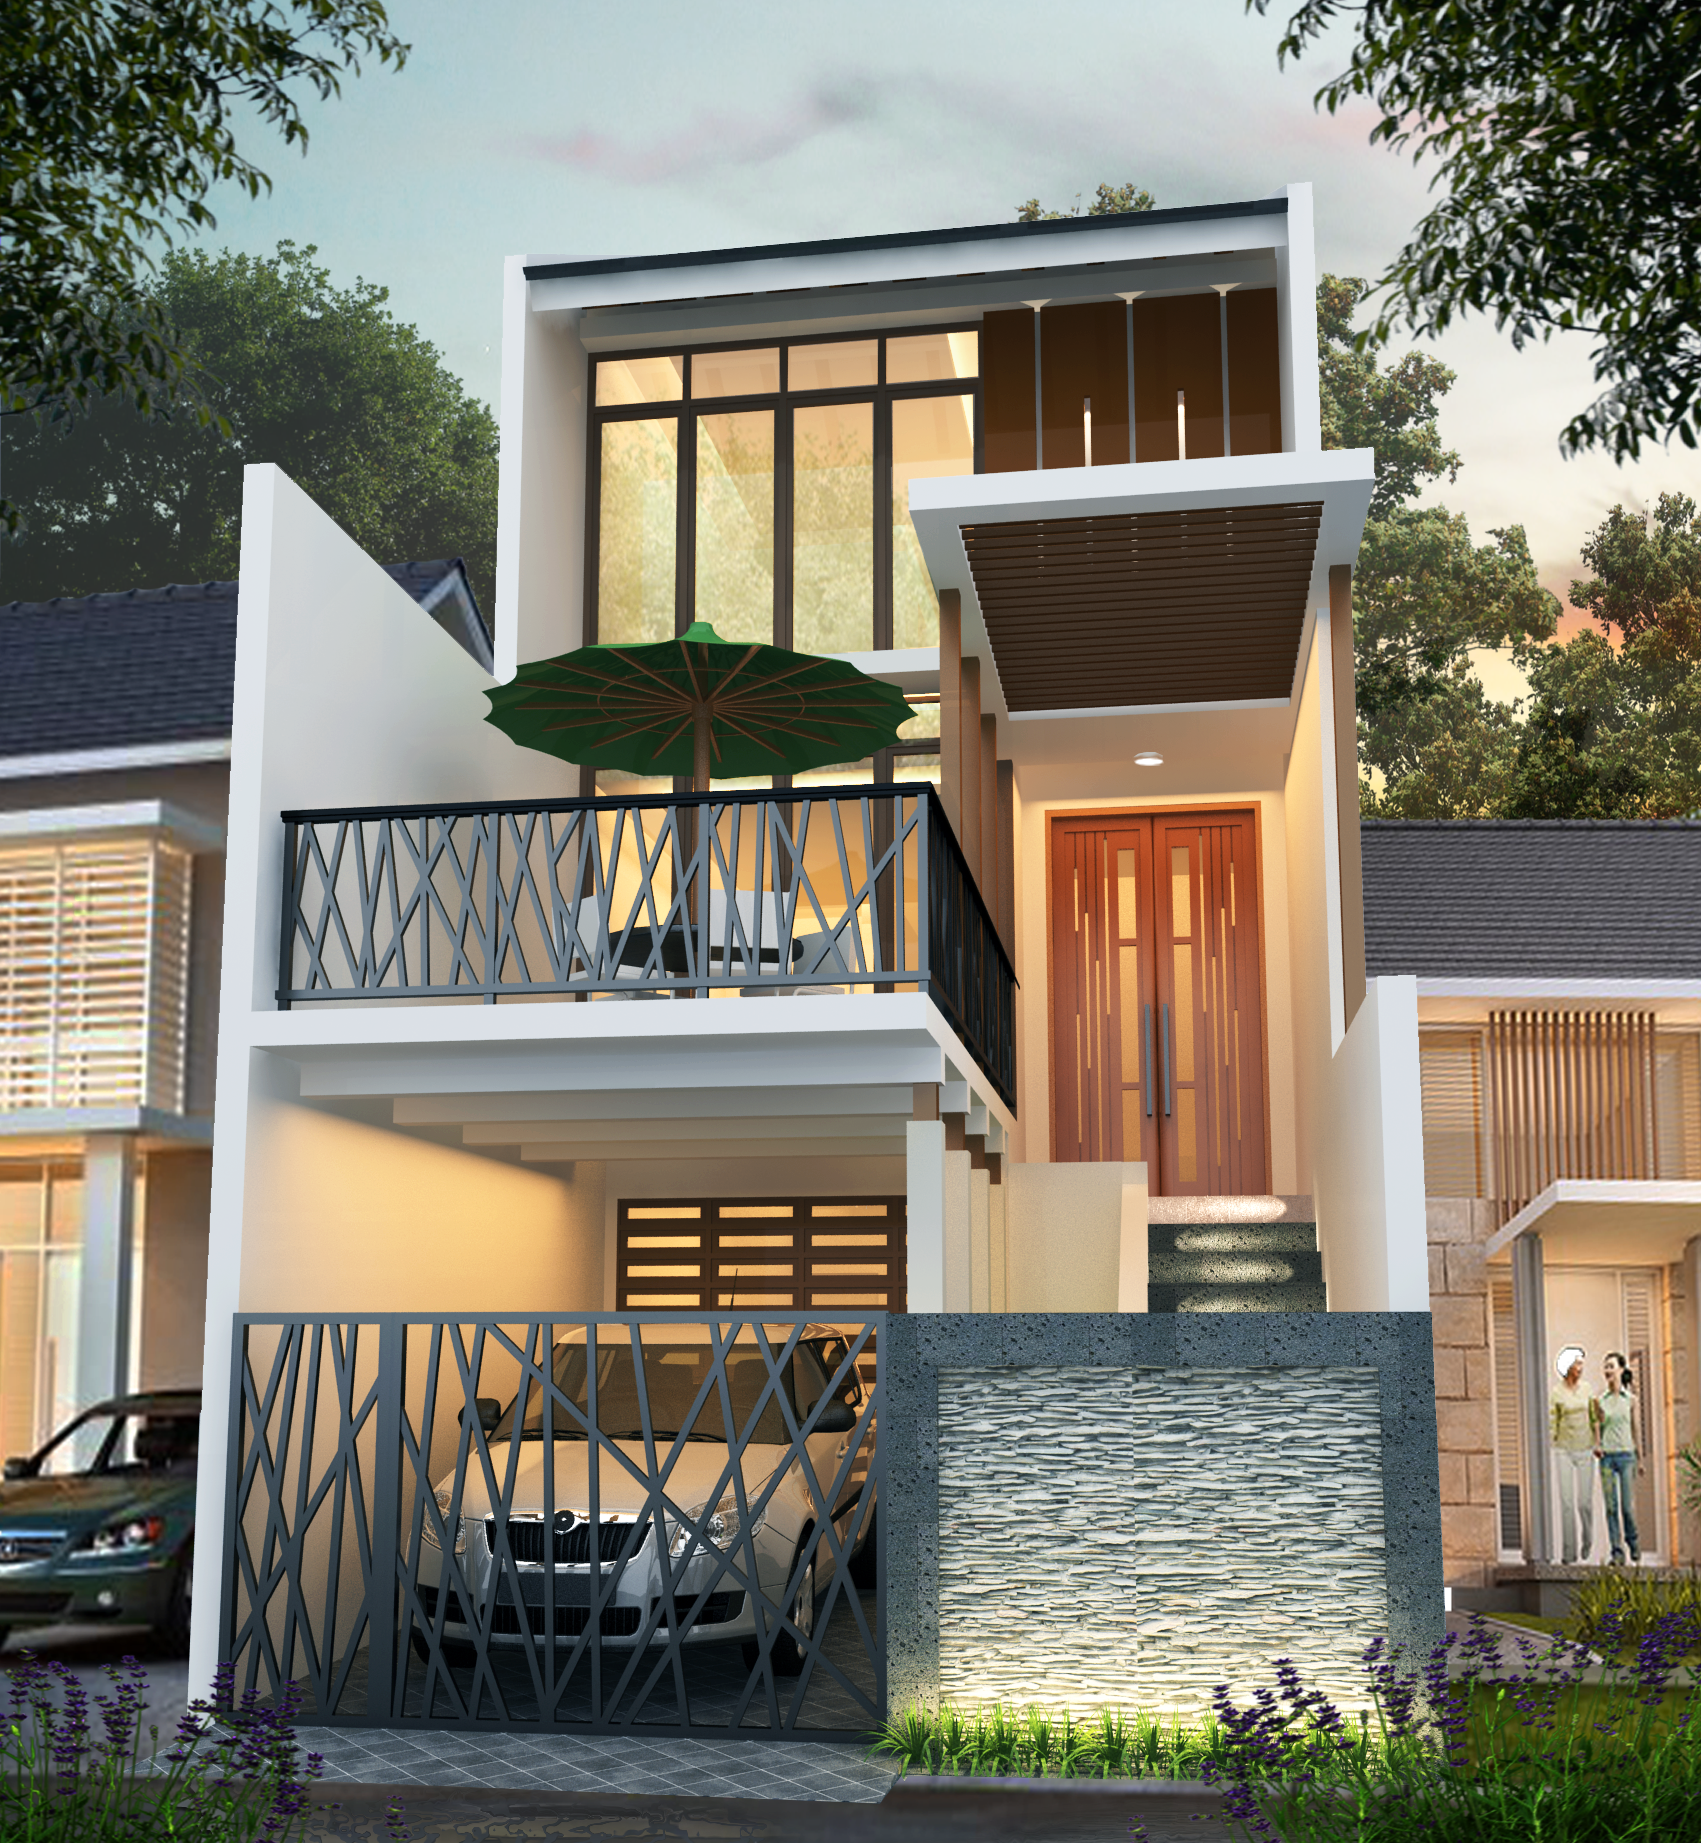  Desain  Rumah  5 x  20  M2 Minimalis  Tiga Lantai Desain  